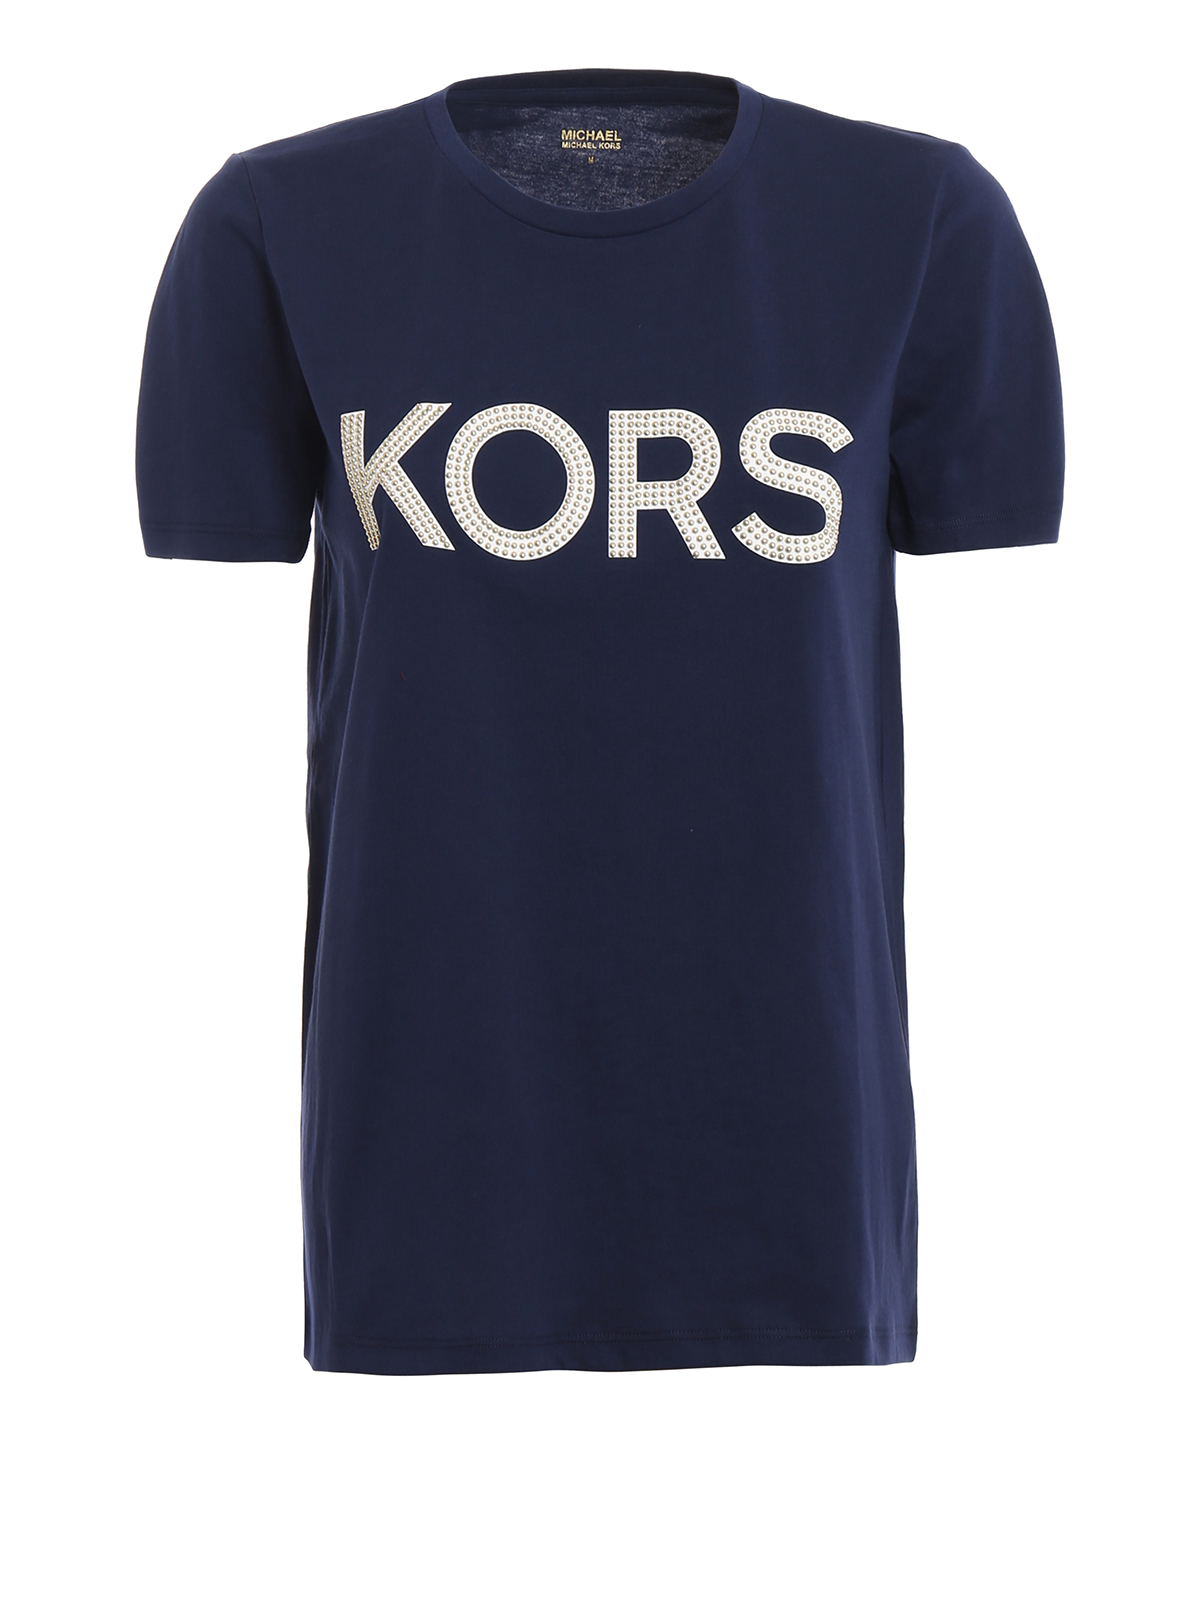 T-shirts Michael Kors - Studded Kors logo blue cotton T-shirt -  MH85M2Y97J456